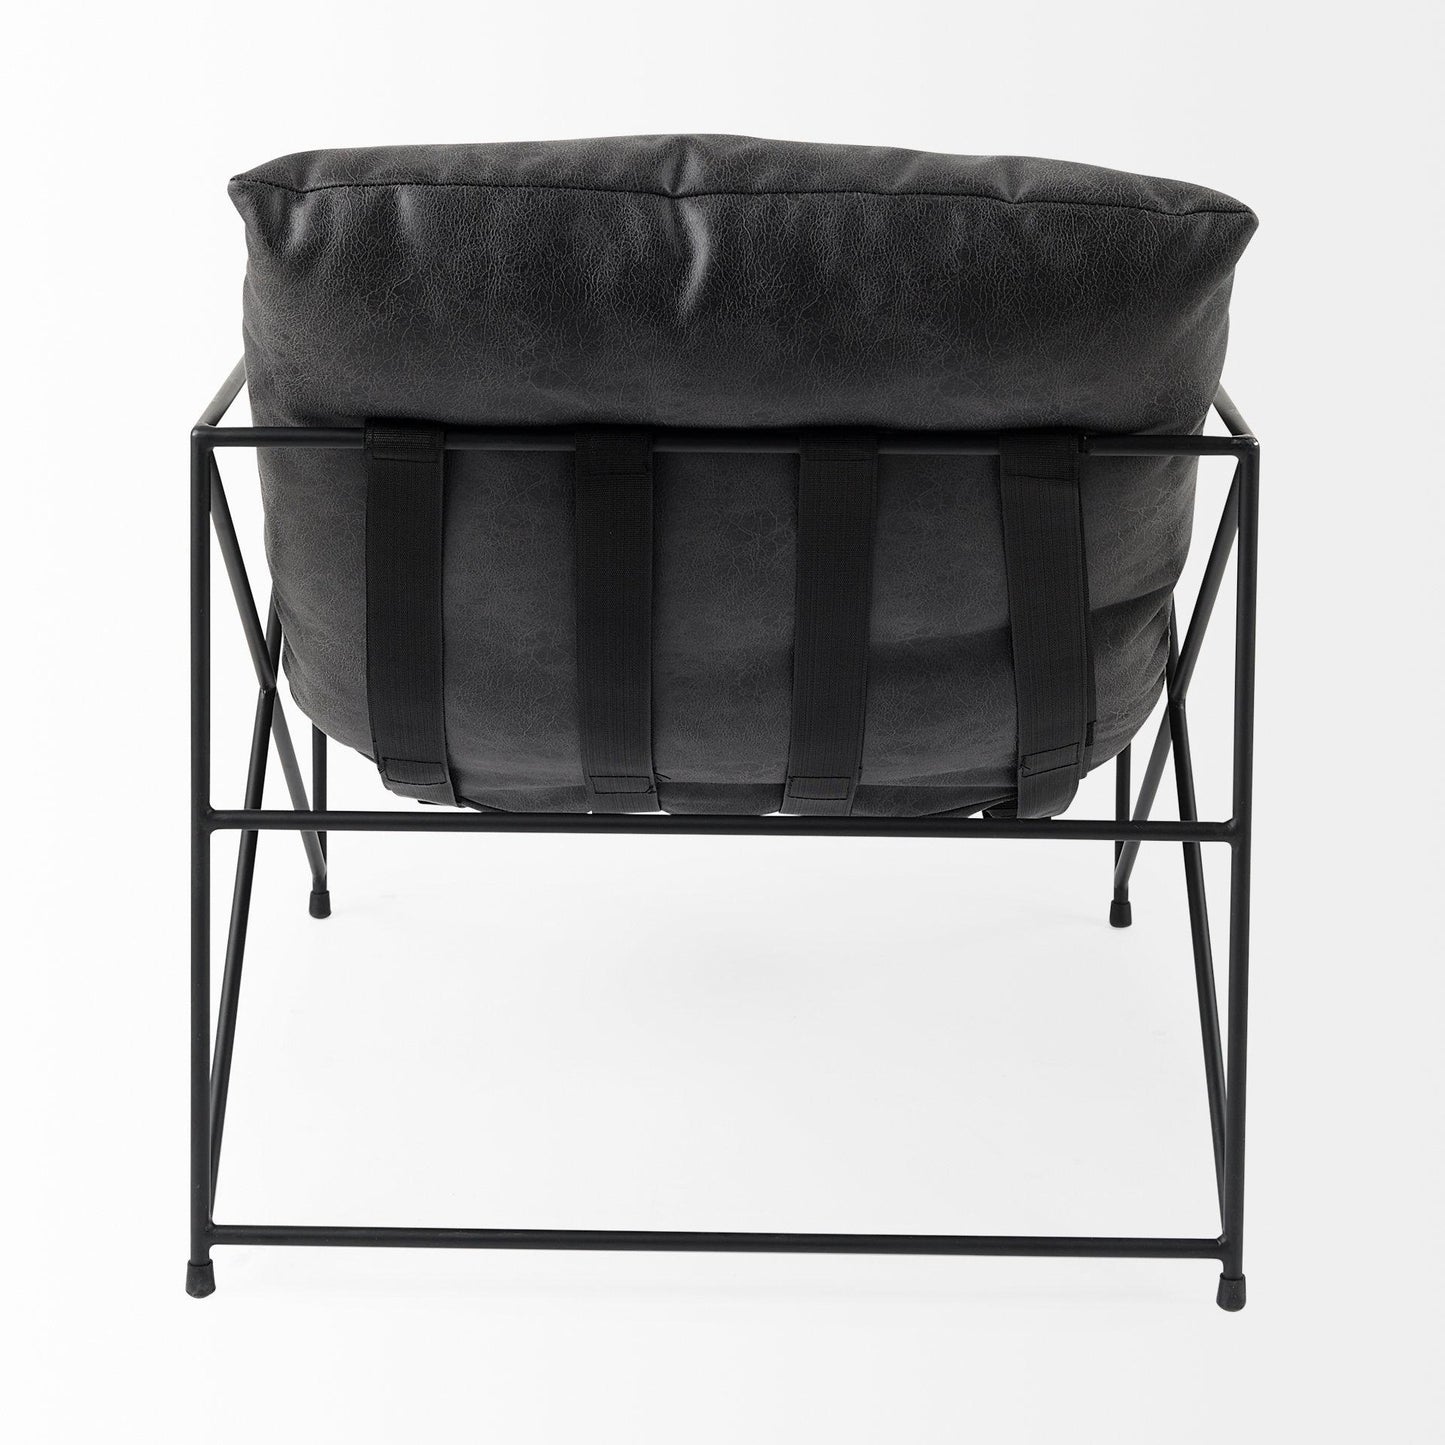 Leonidas 28.5L x 29.5W x 34.0H Black Faux Leather Seat W/ Black Metal Frame Accent Chair